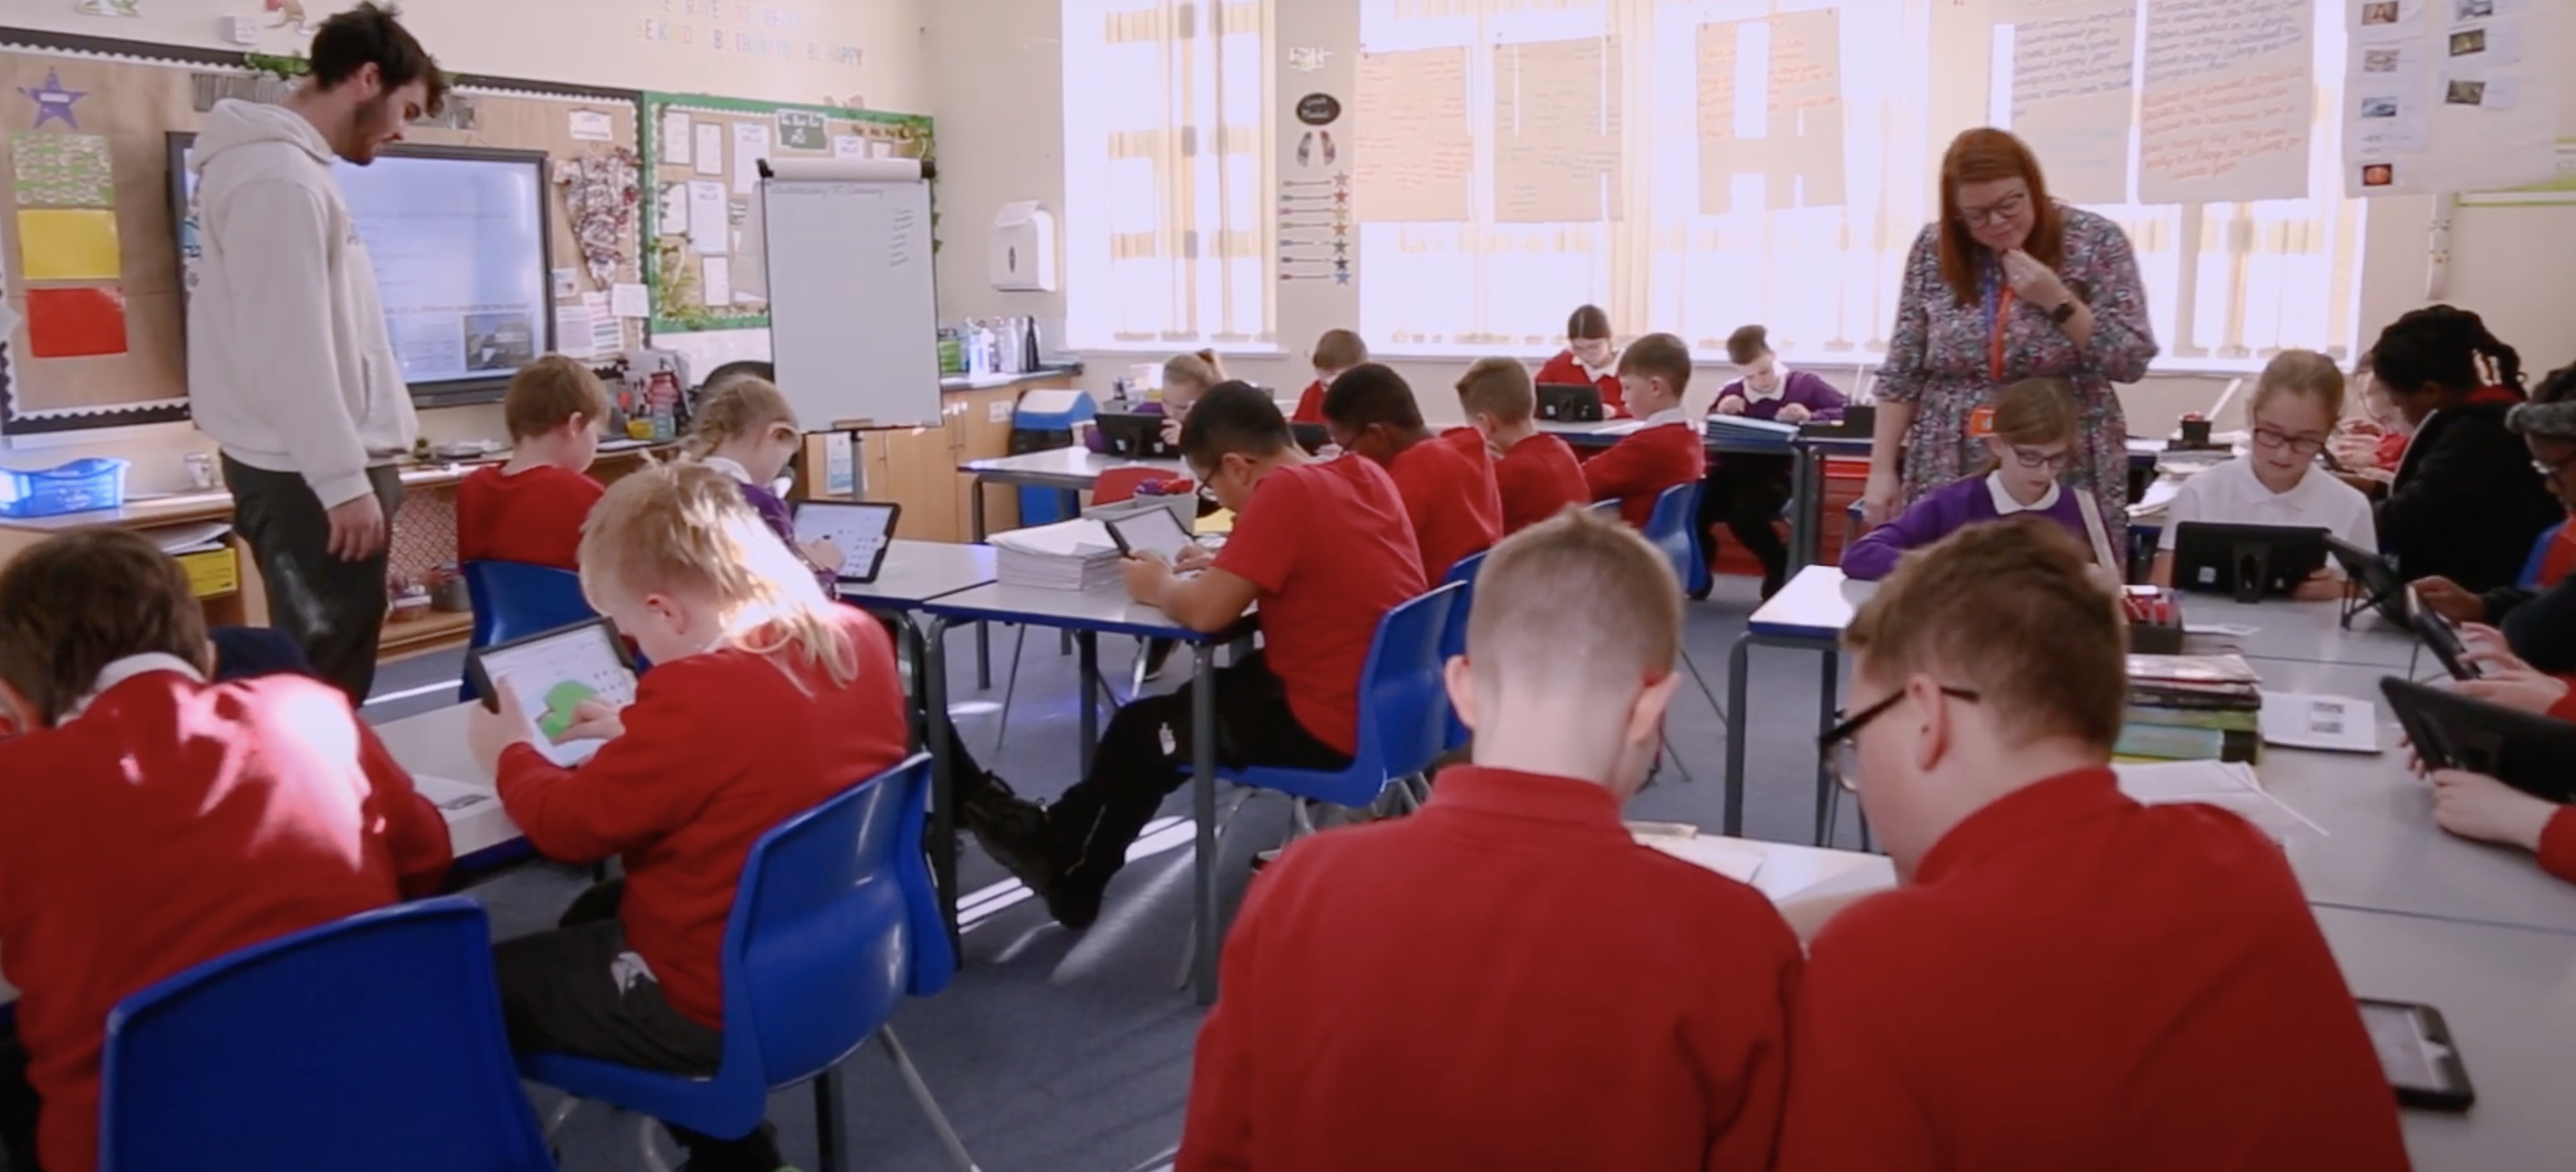 Schoolchildren in red school uniform using tablets in a classroom as a teacher supervises